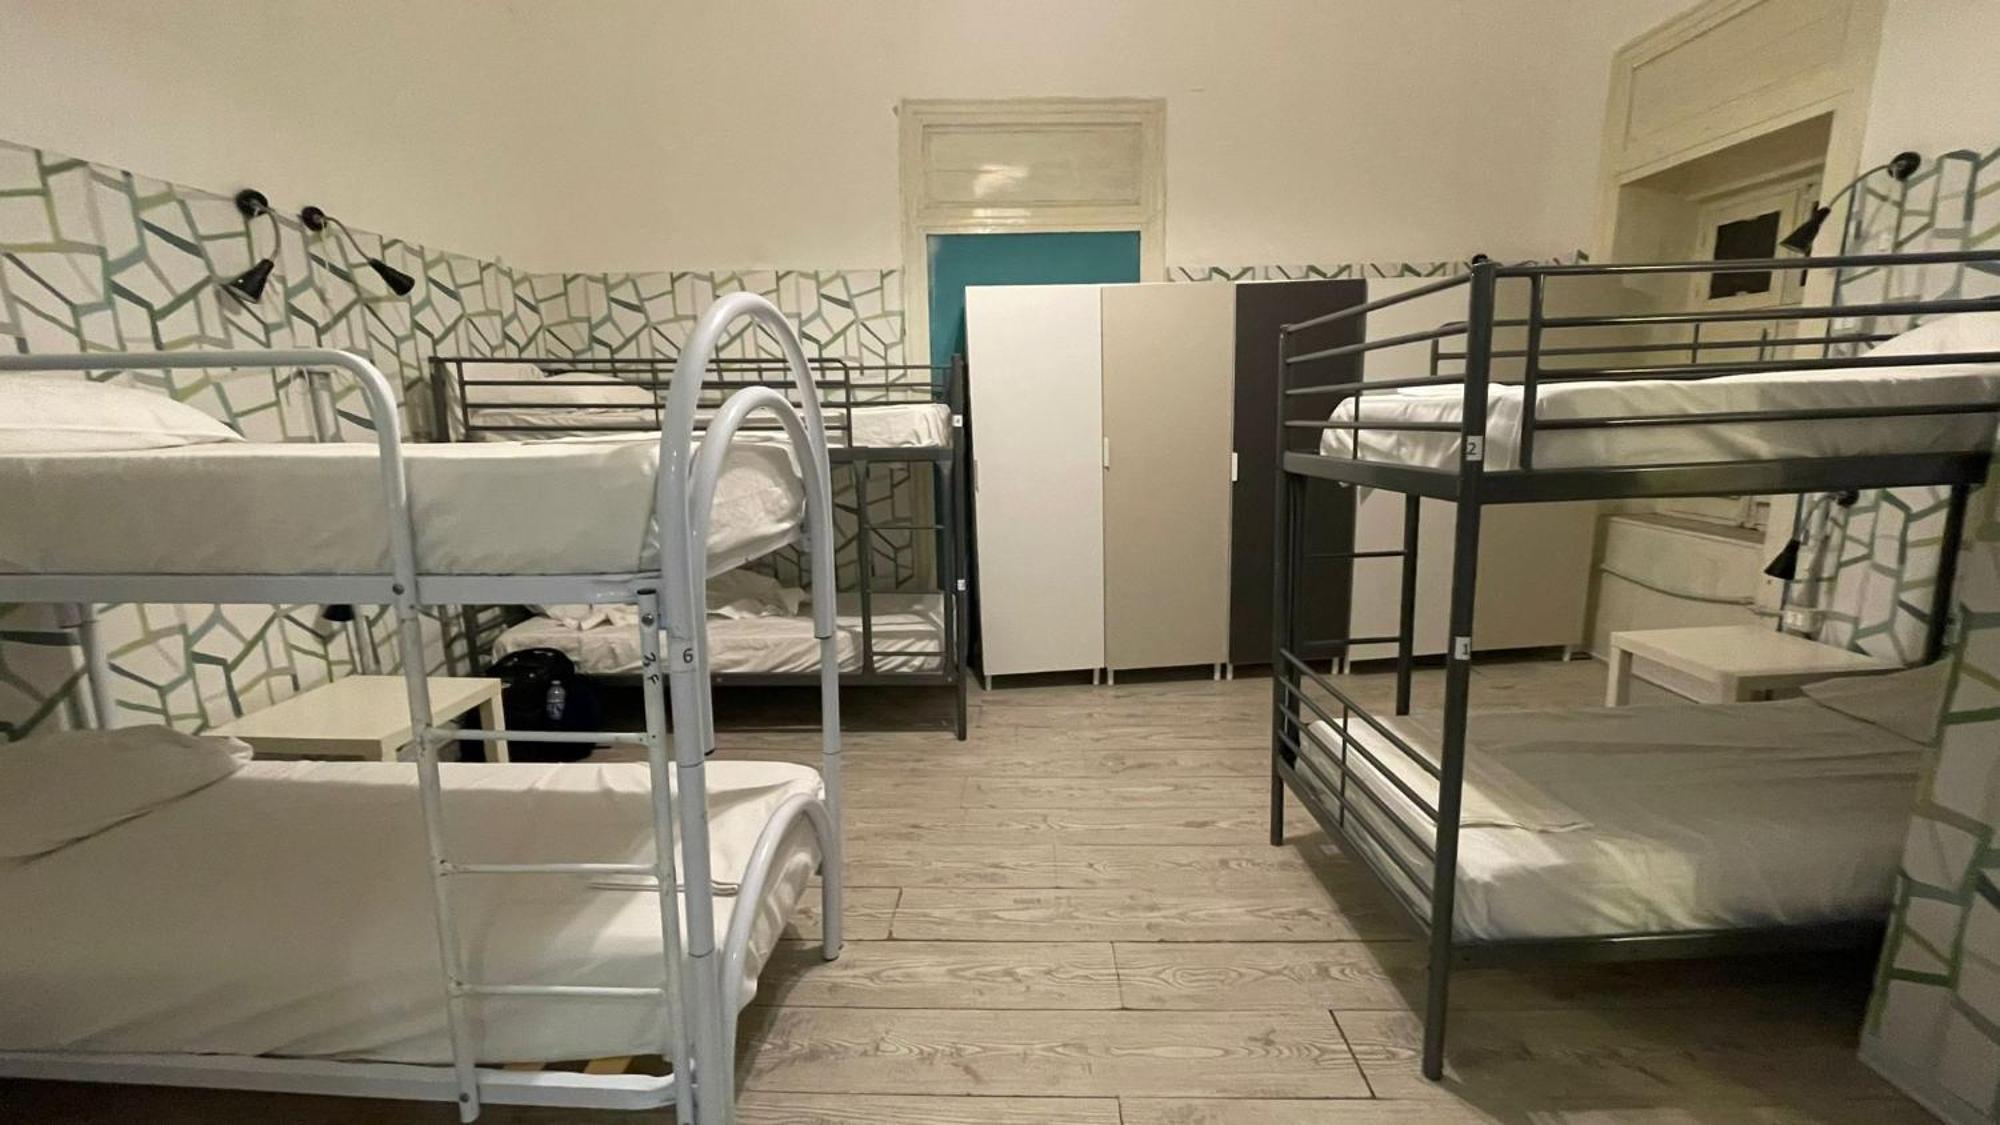 Balarm Hostel - Youth Hostel Age Limit 18-50 팔레르모 외부 사진